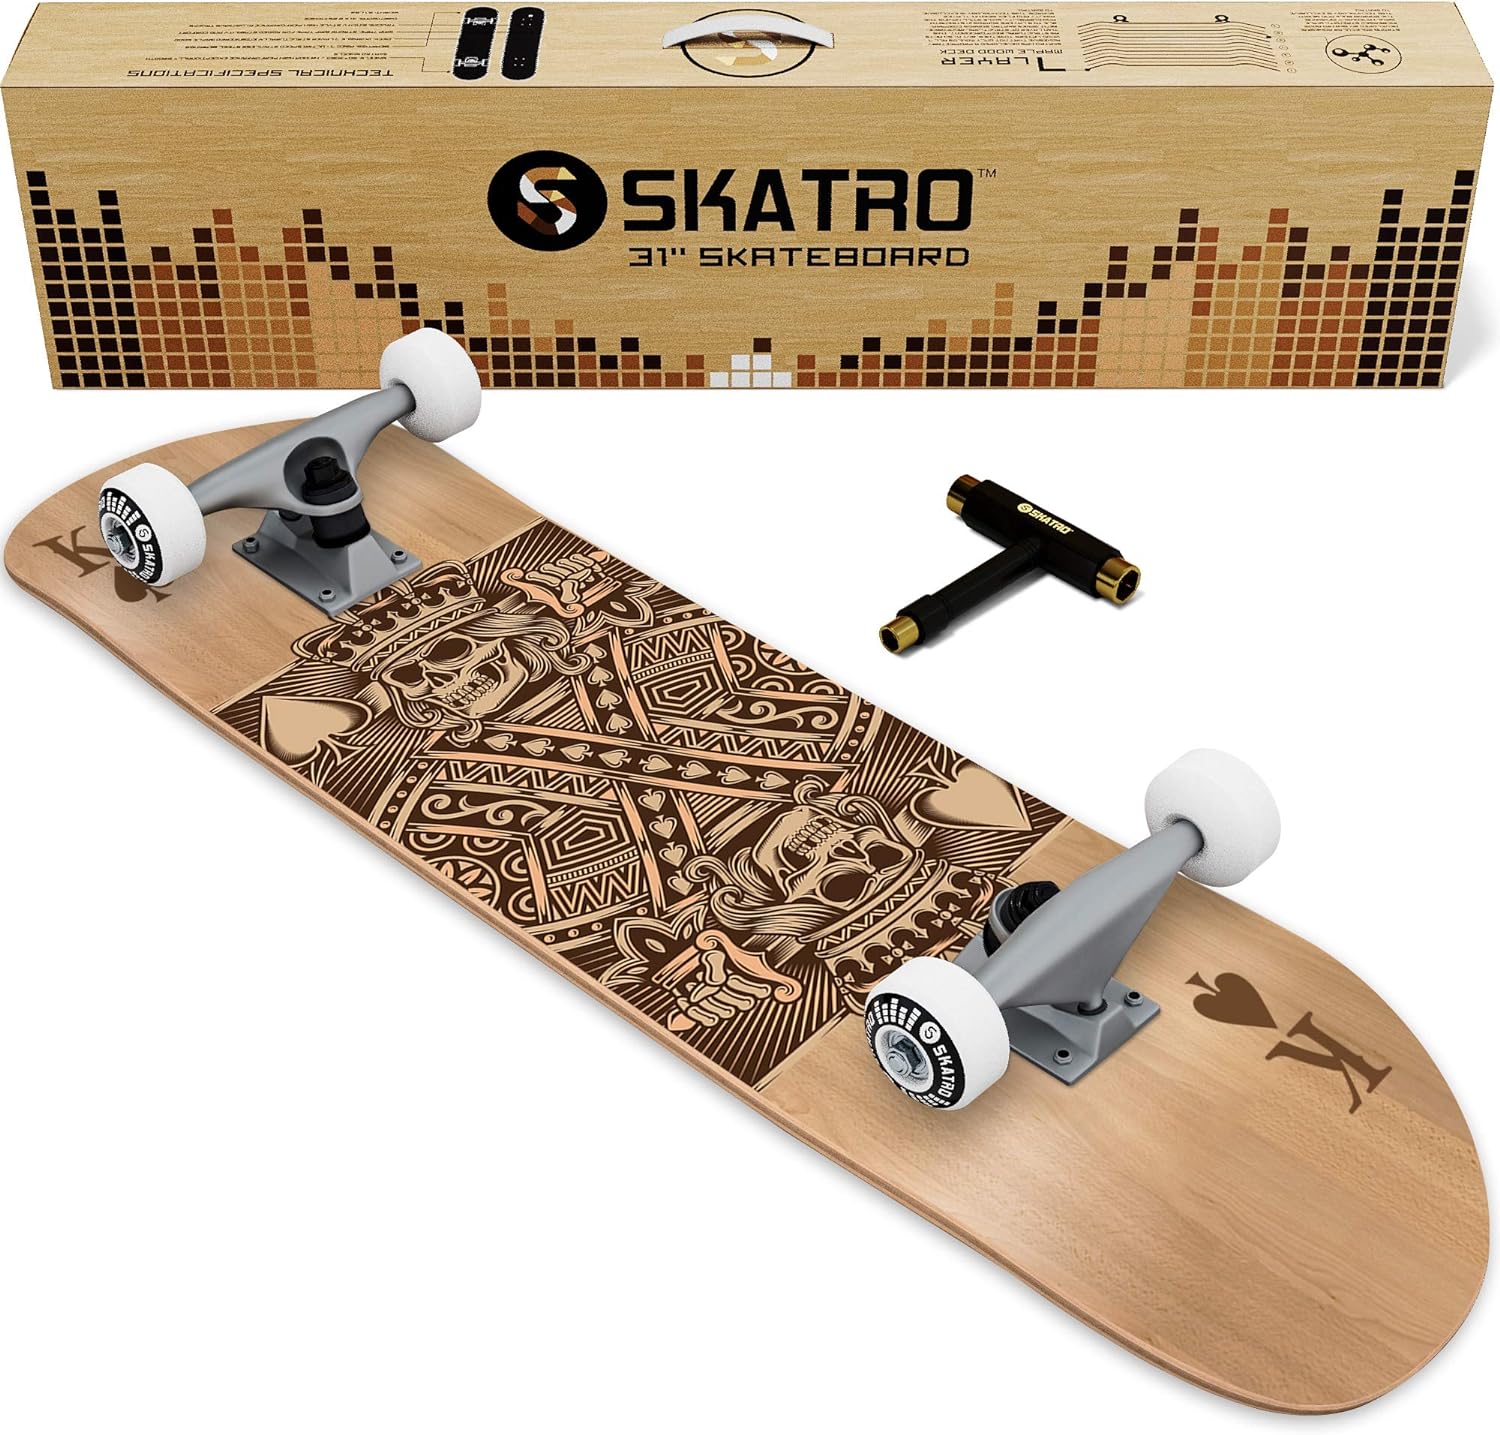 SKATRO - Pro Skateboard 31 Complete Skateboard. Skate Board Ages: Adults, Boys, Girls, Beginners, and Kids